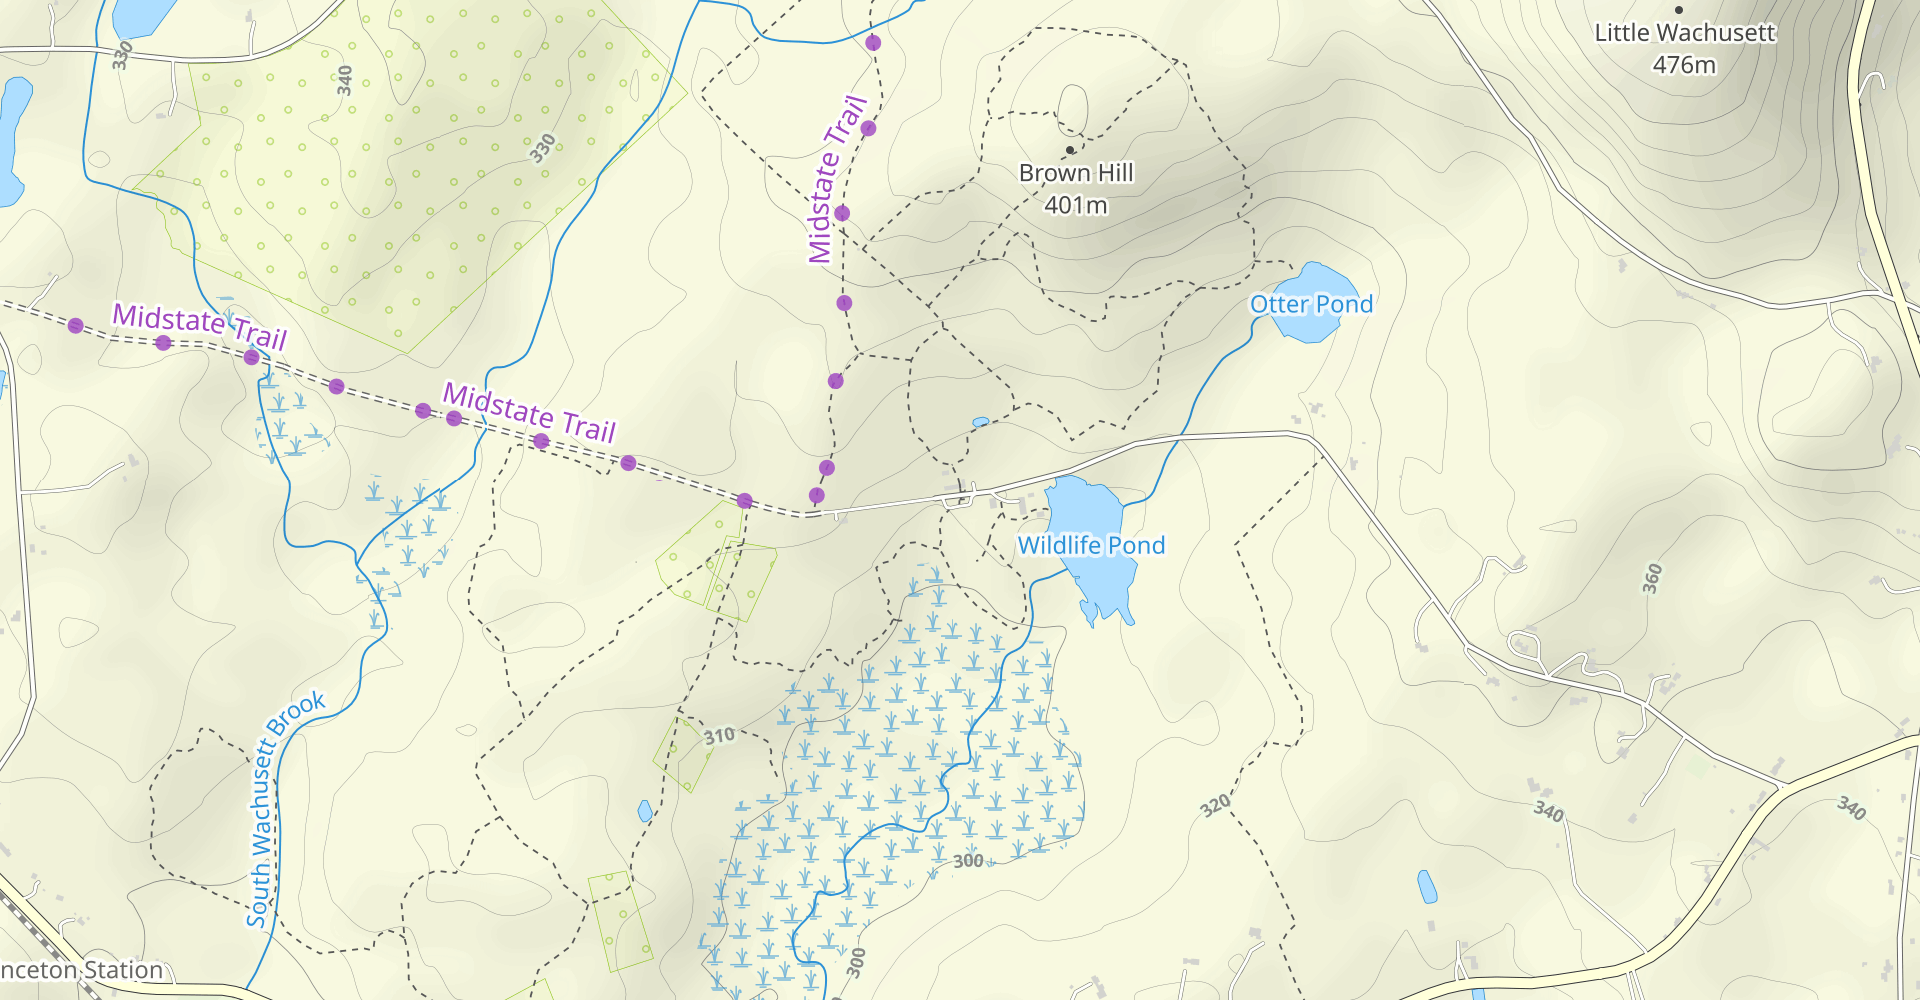 Wachusett Mountain via Chapman Trail